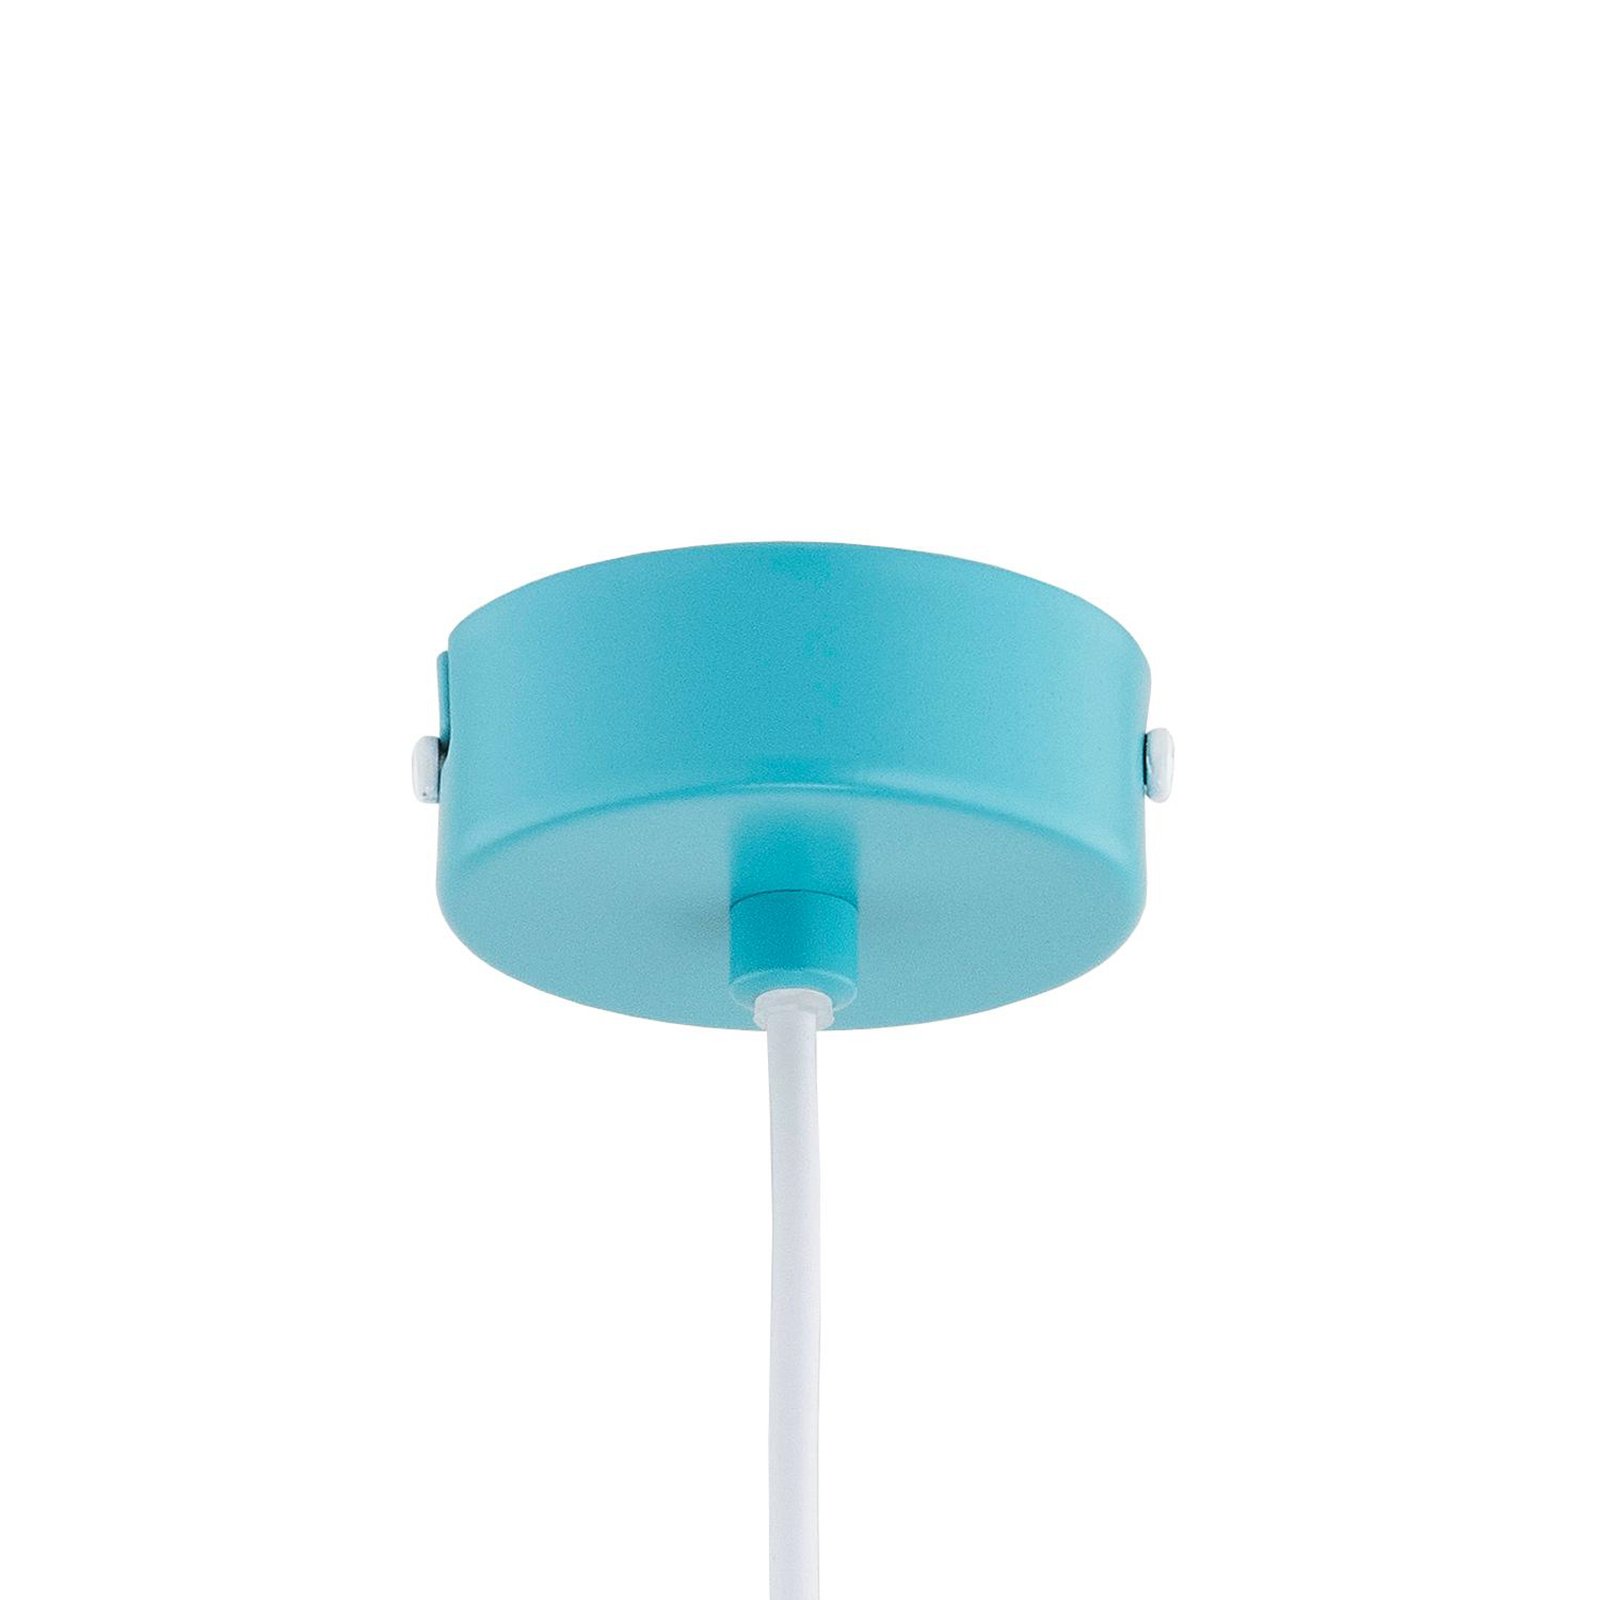 Solo Gem hanglamp, lichtblauw, Ø 23 cm, metaal